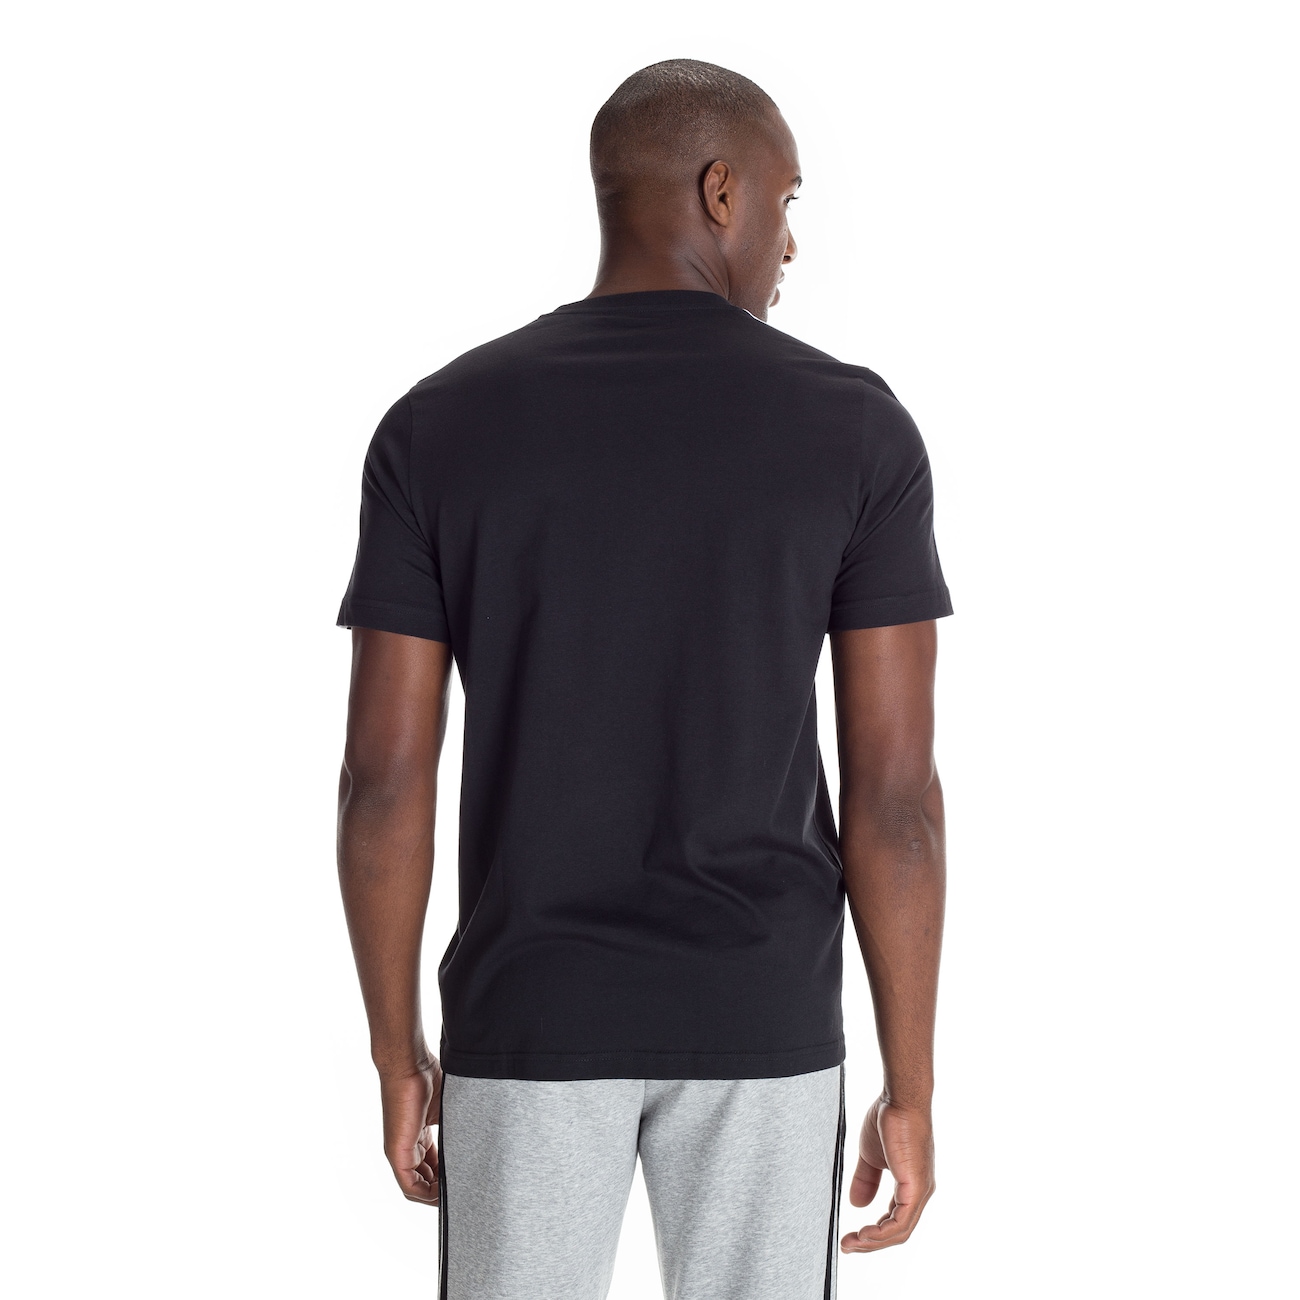 Camiseta Adidas Essentials 3 Listras Masculina IB8150 - Preto